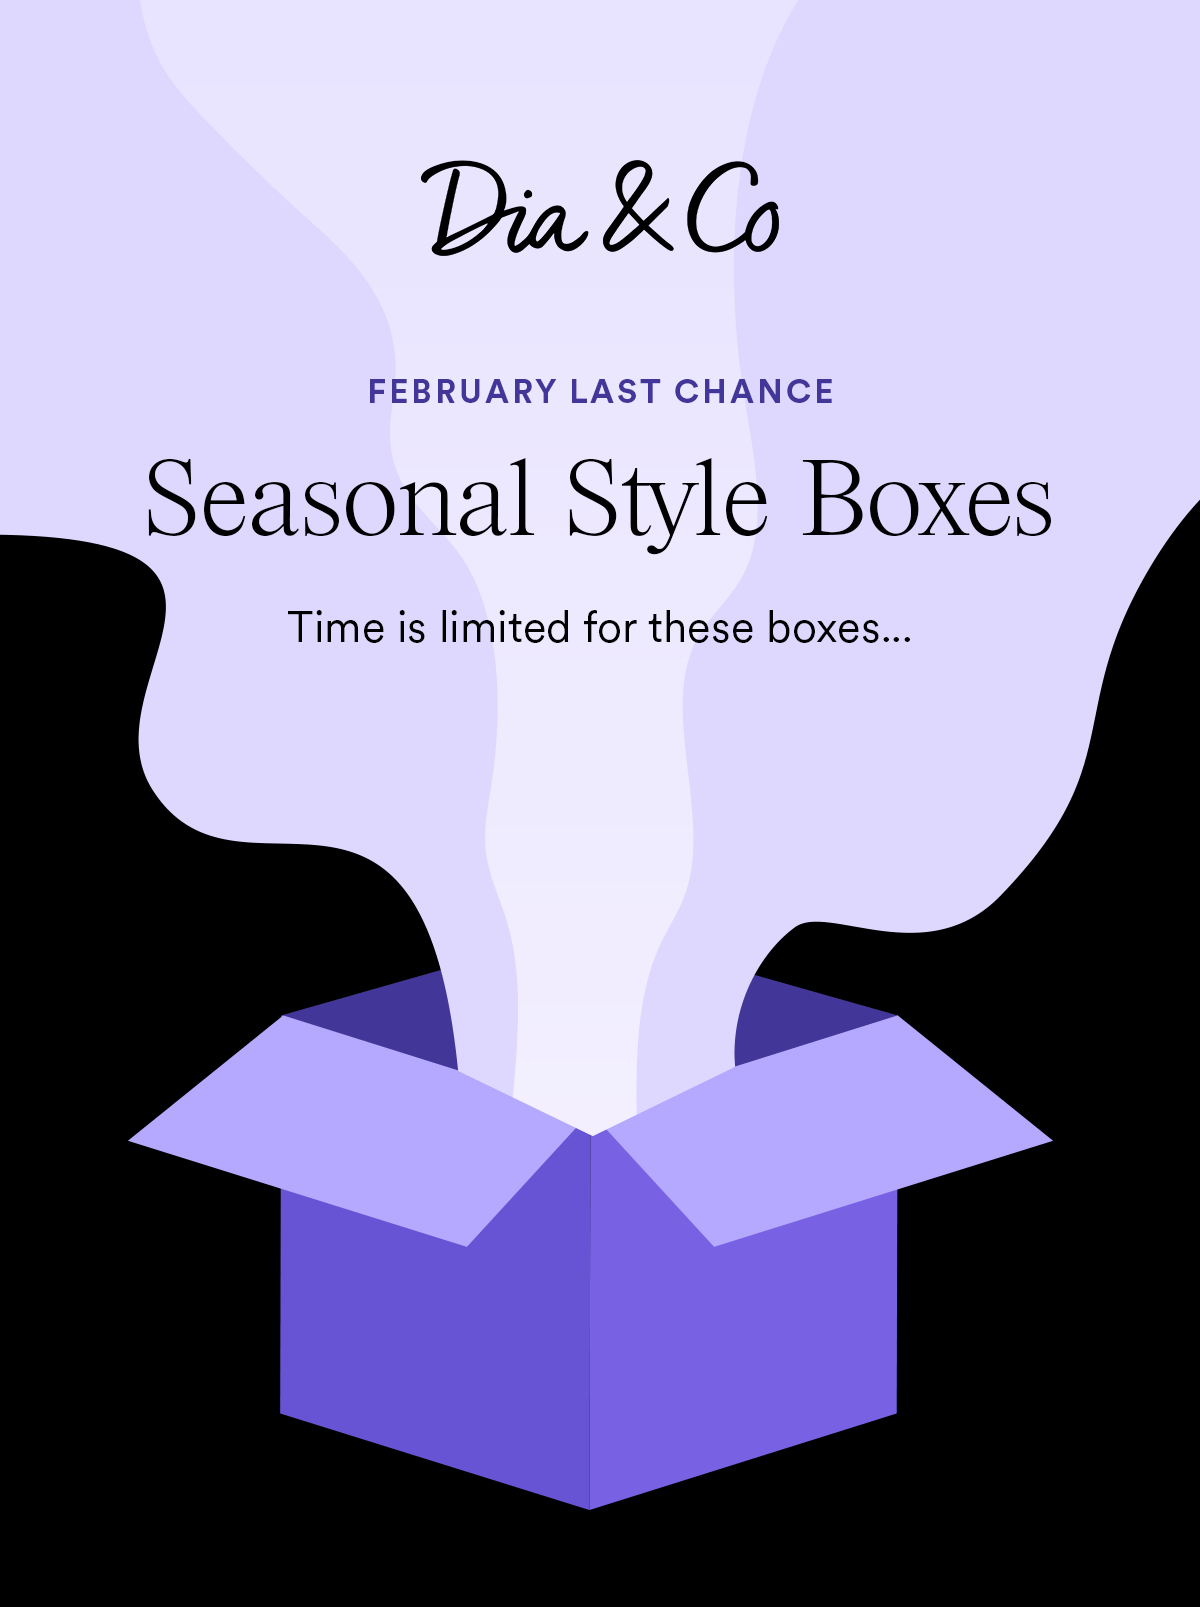 New Februrary Seasonal Style Boxes are here